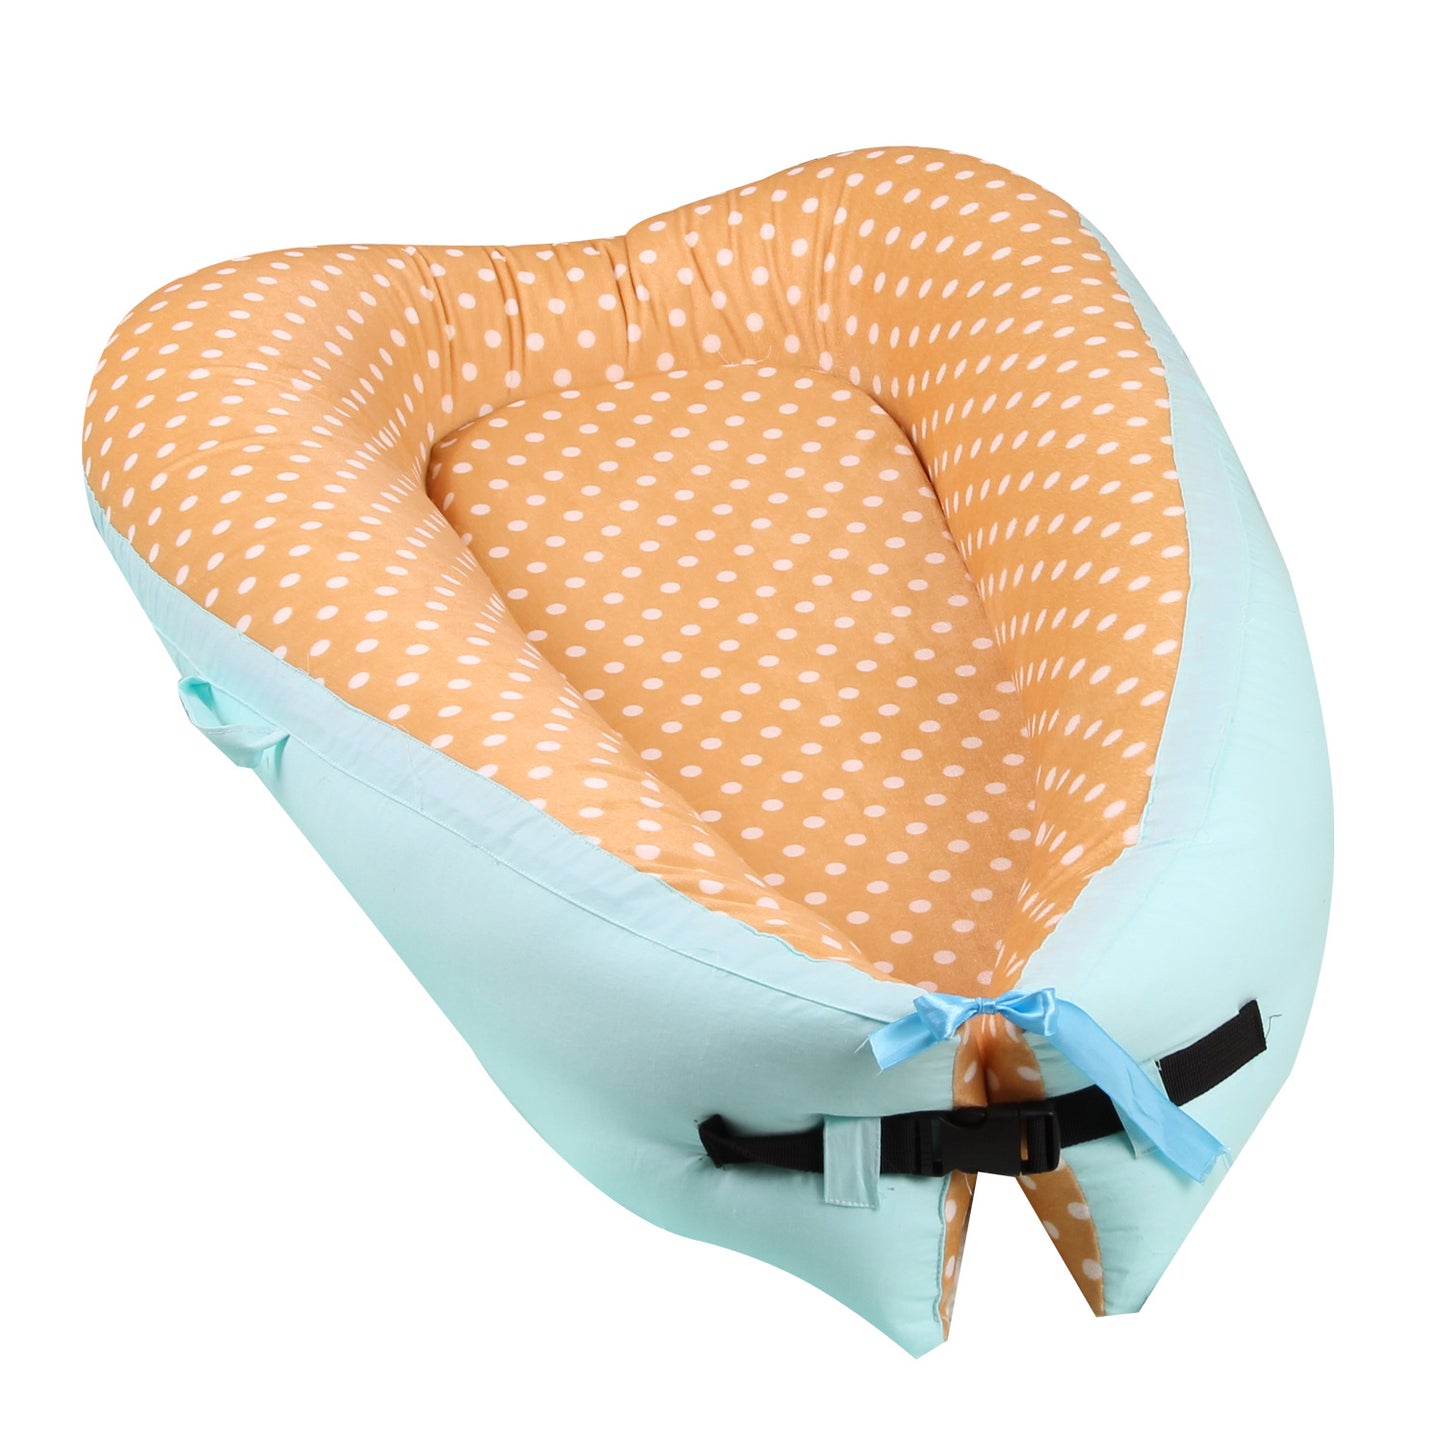 Tragbares Coax-Babybett Bettbett Baby-Uterus-Bionic-Bett abnehmbares und waschbares Neugeborenenbett